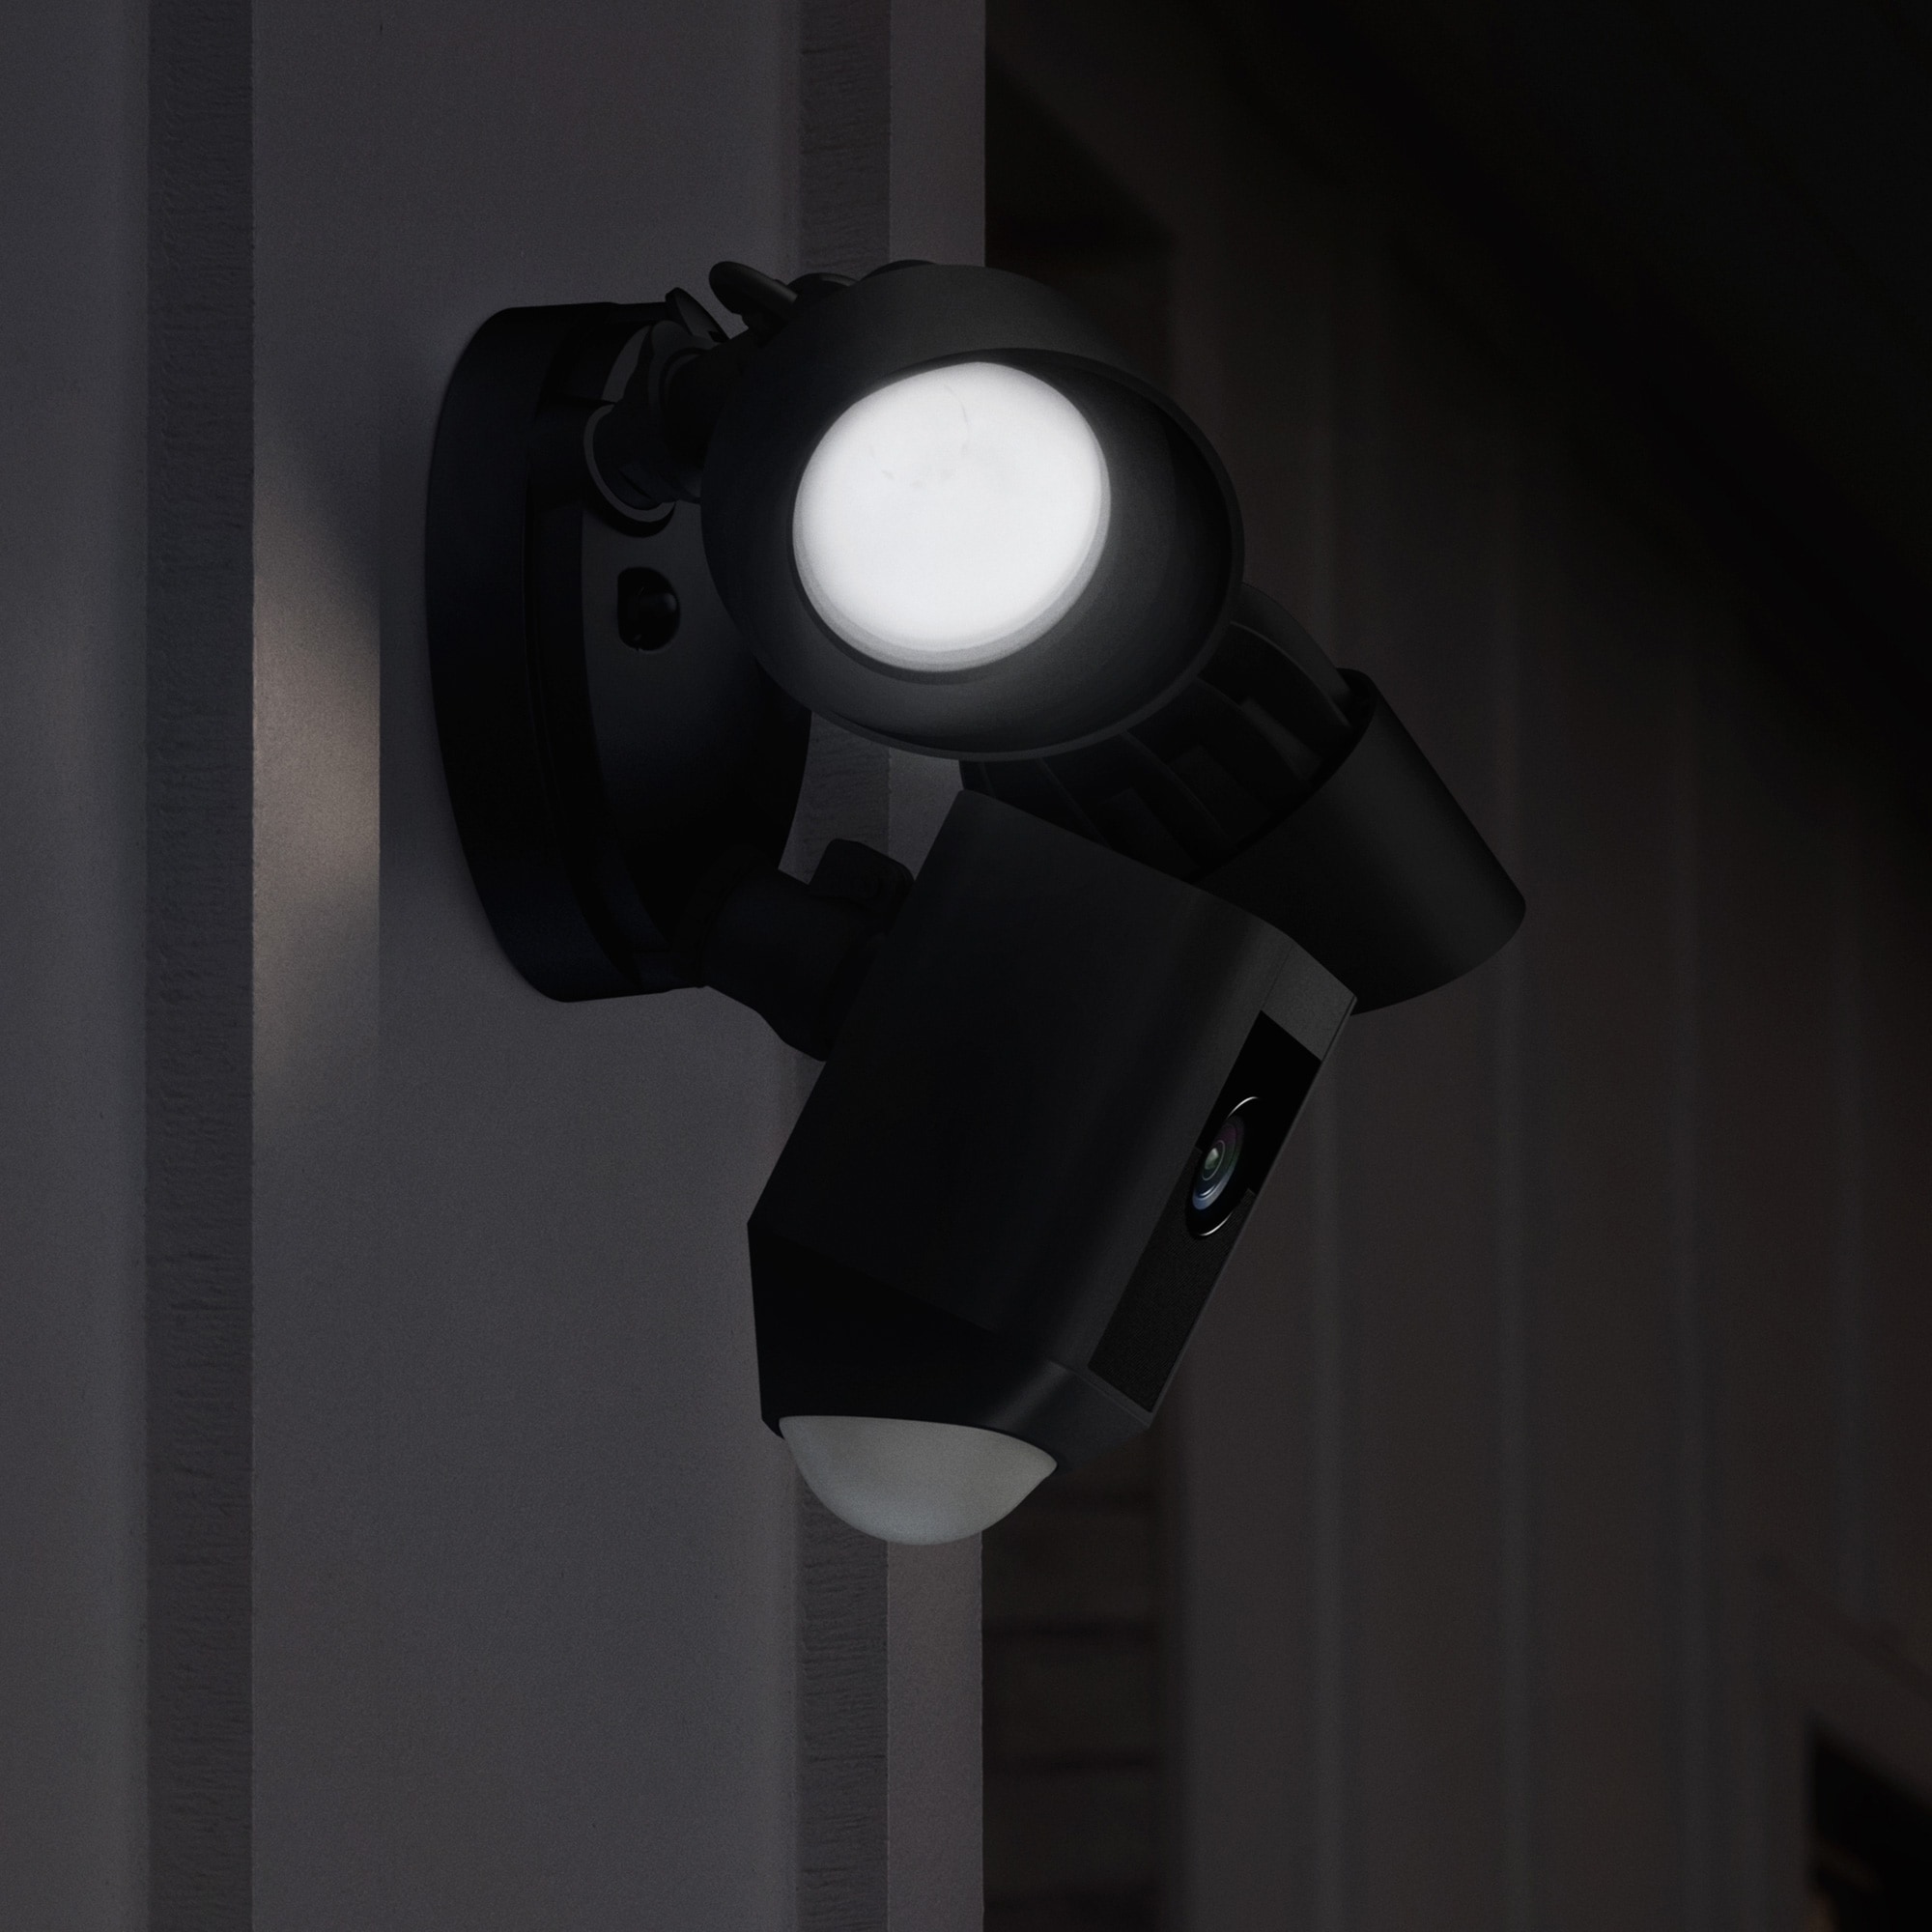 Shop Ring Video Doorbell - Venetian Bronze + Floodlight Camera Plus - White  Bundle at Lowes.com